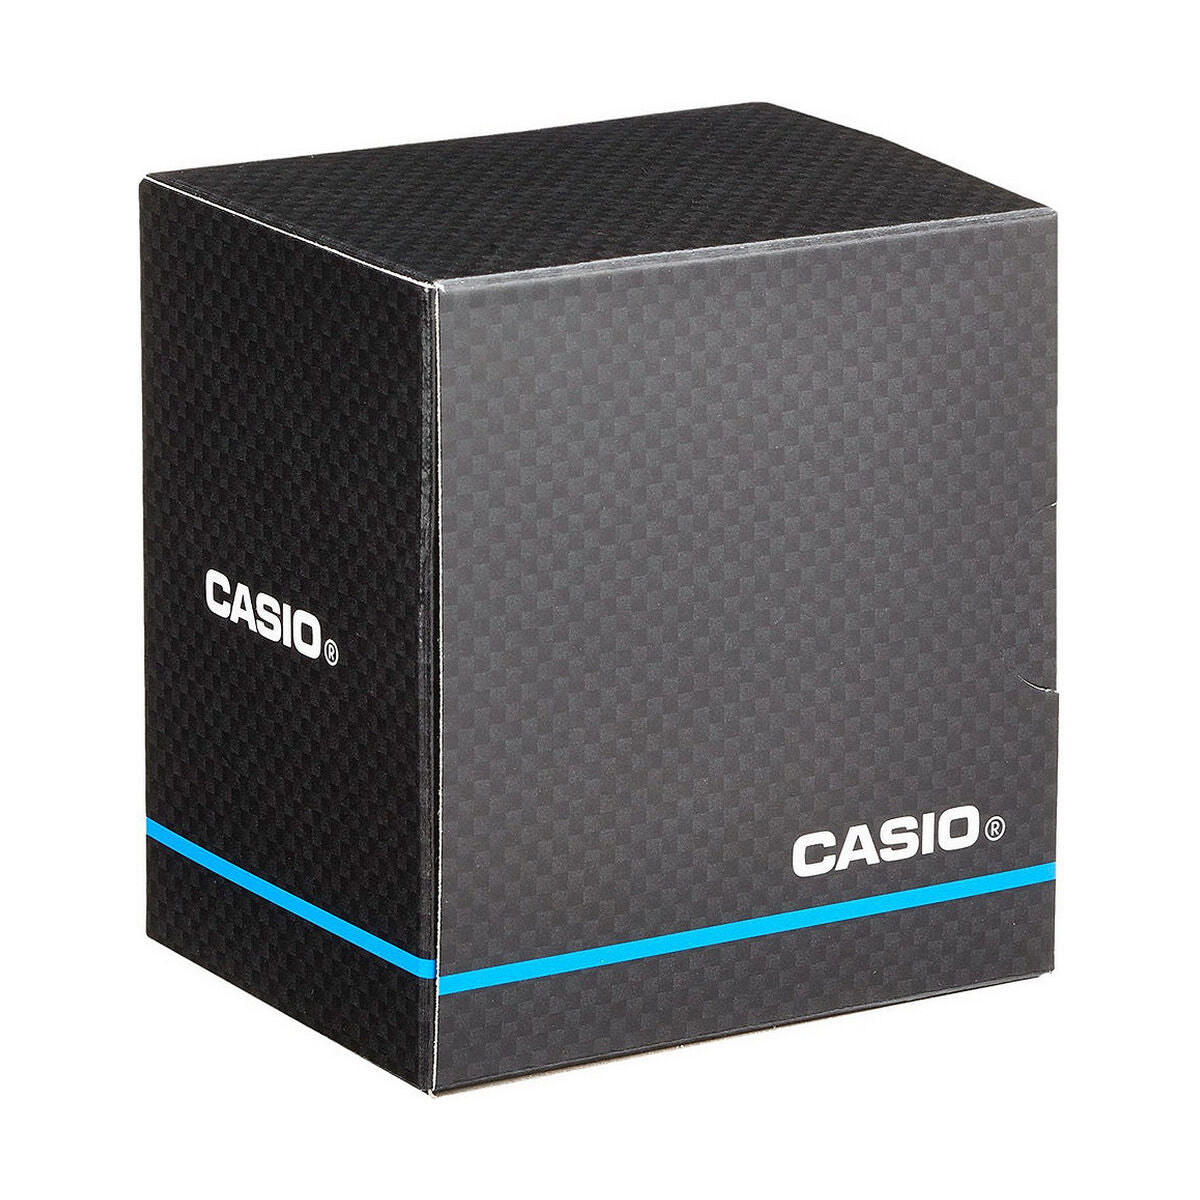 Kaufe Unisex-Uhr Casio SPORT CLASSIC Rosa bei AWK Flagship um € 67.00